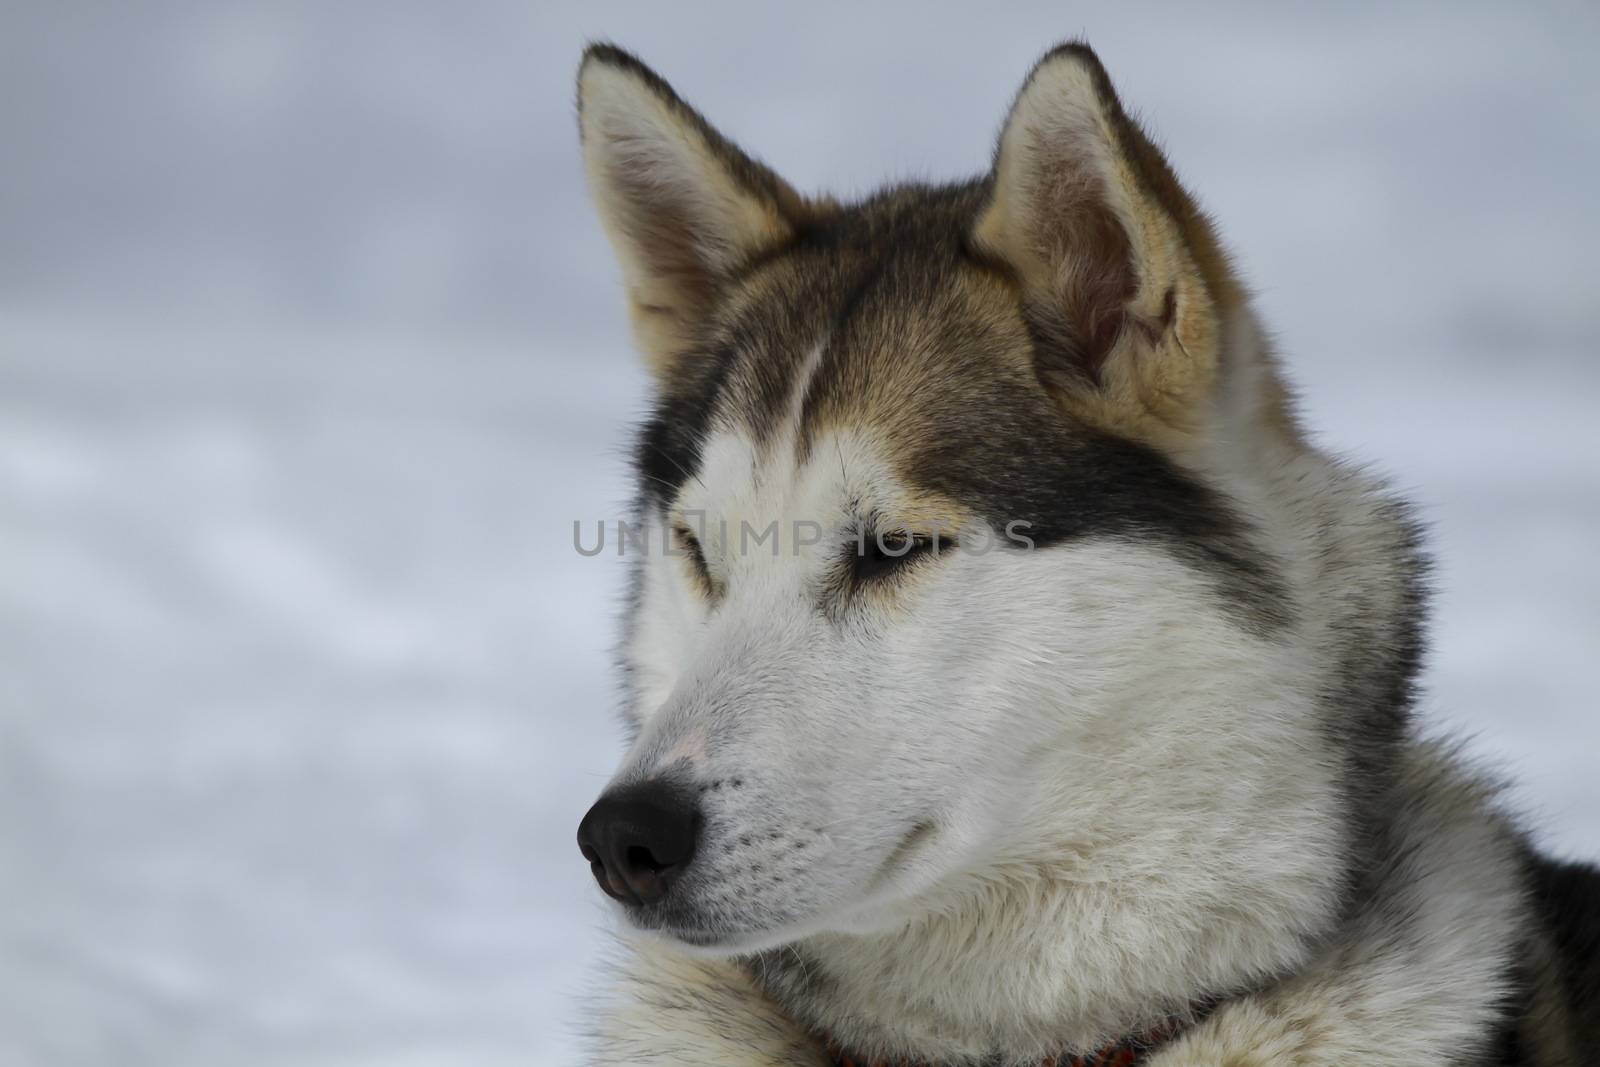 very beautiful portrait of a husky dog by mariephotos